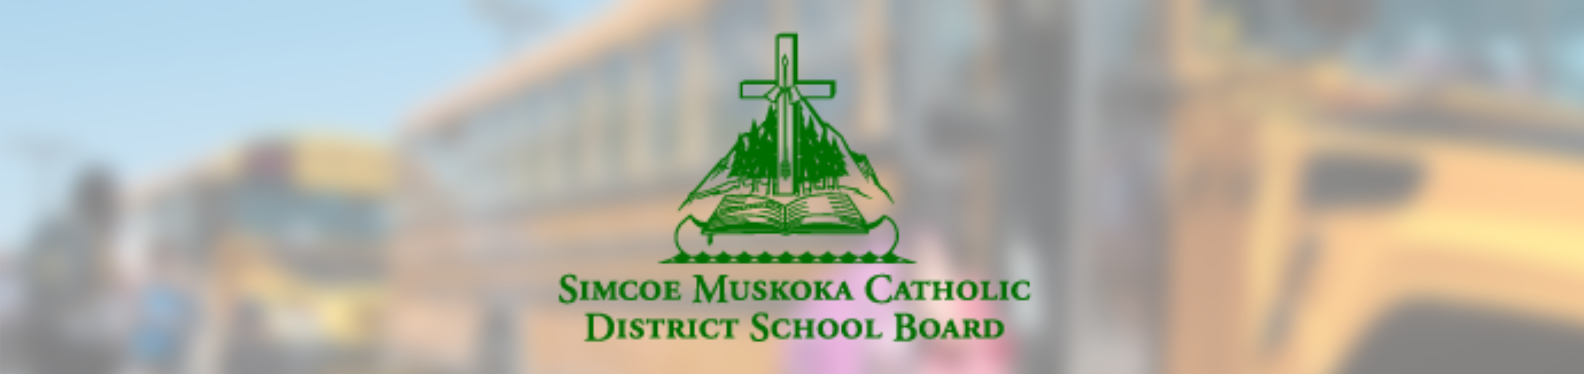 Simcoe Muskoka Catholic District School Board logo with bus background